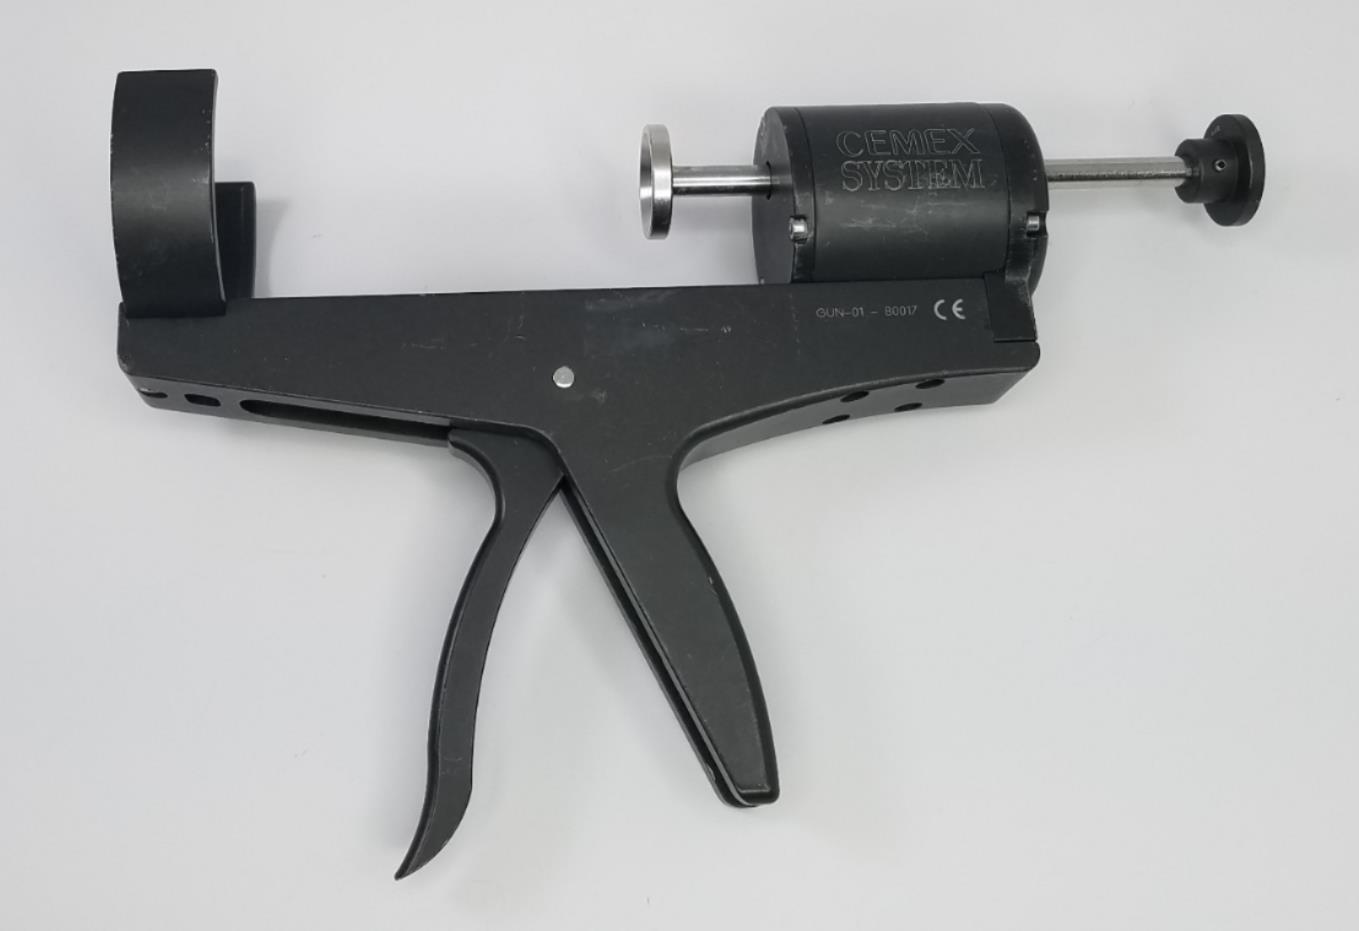 Cemex System GUN-01 Orthopedic Bone Cement Gun | eBay